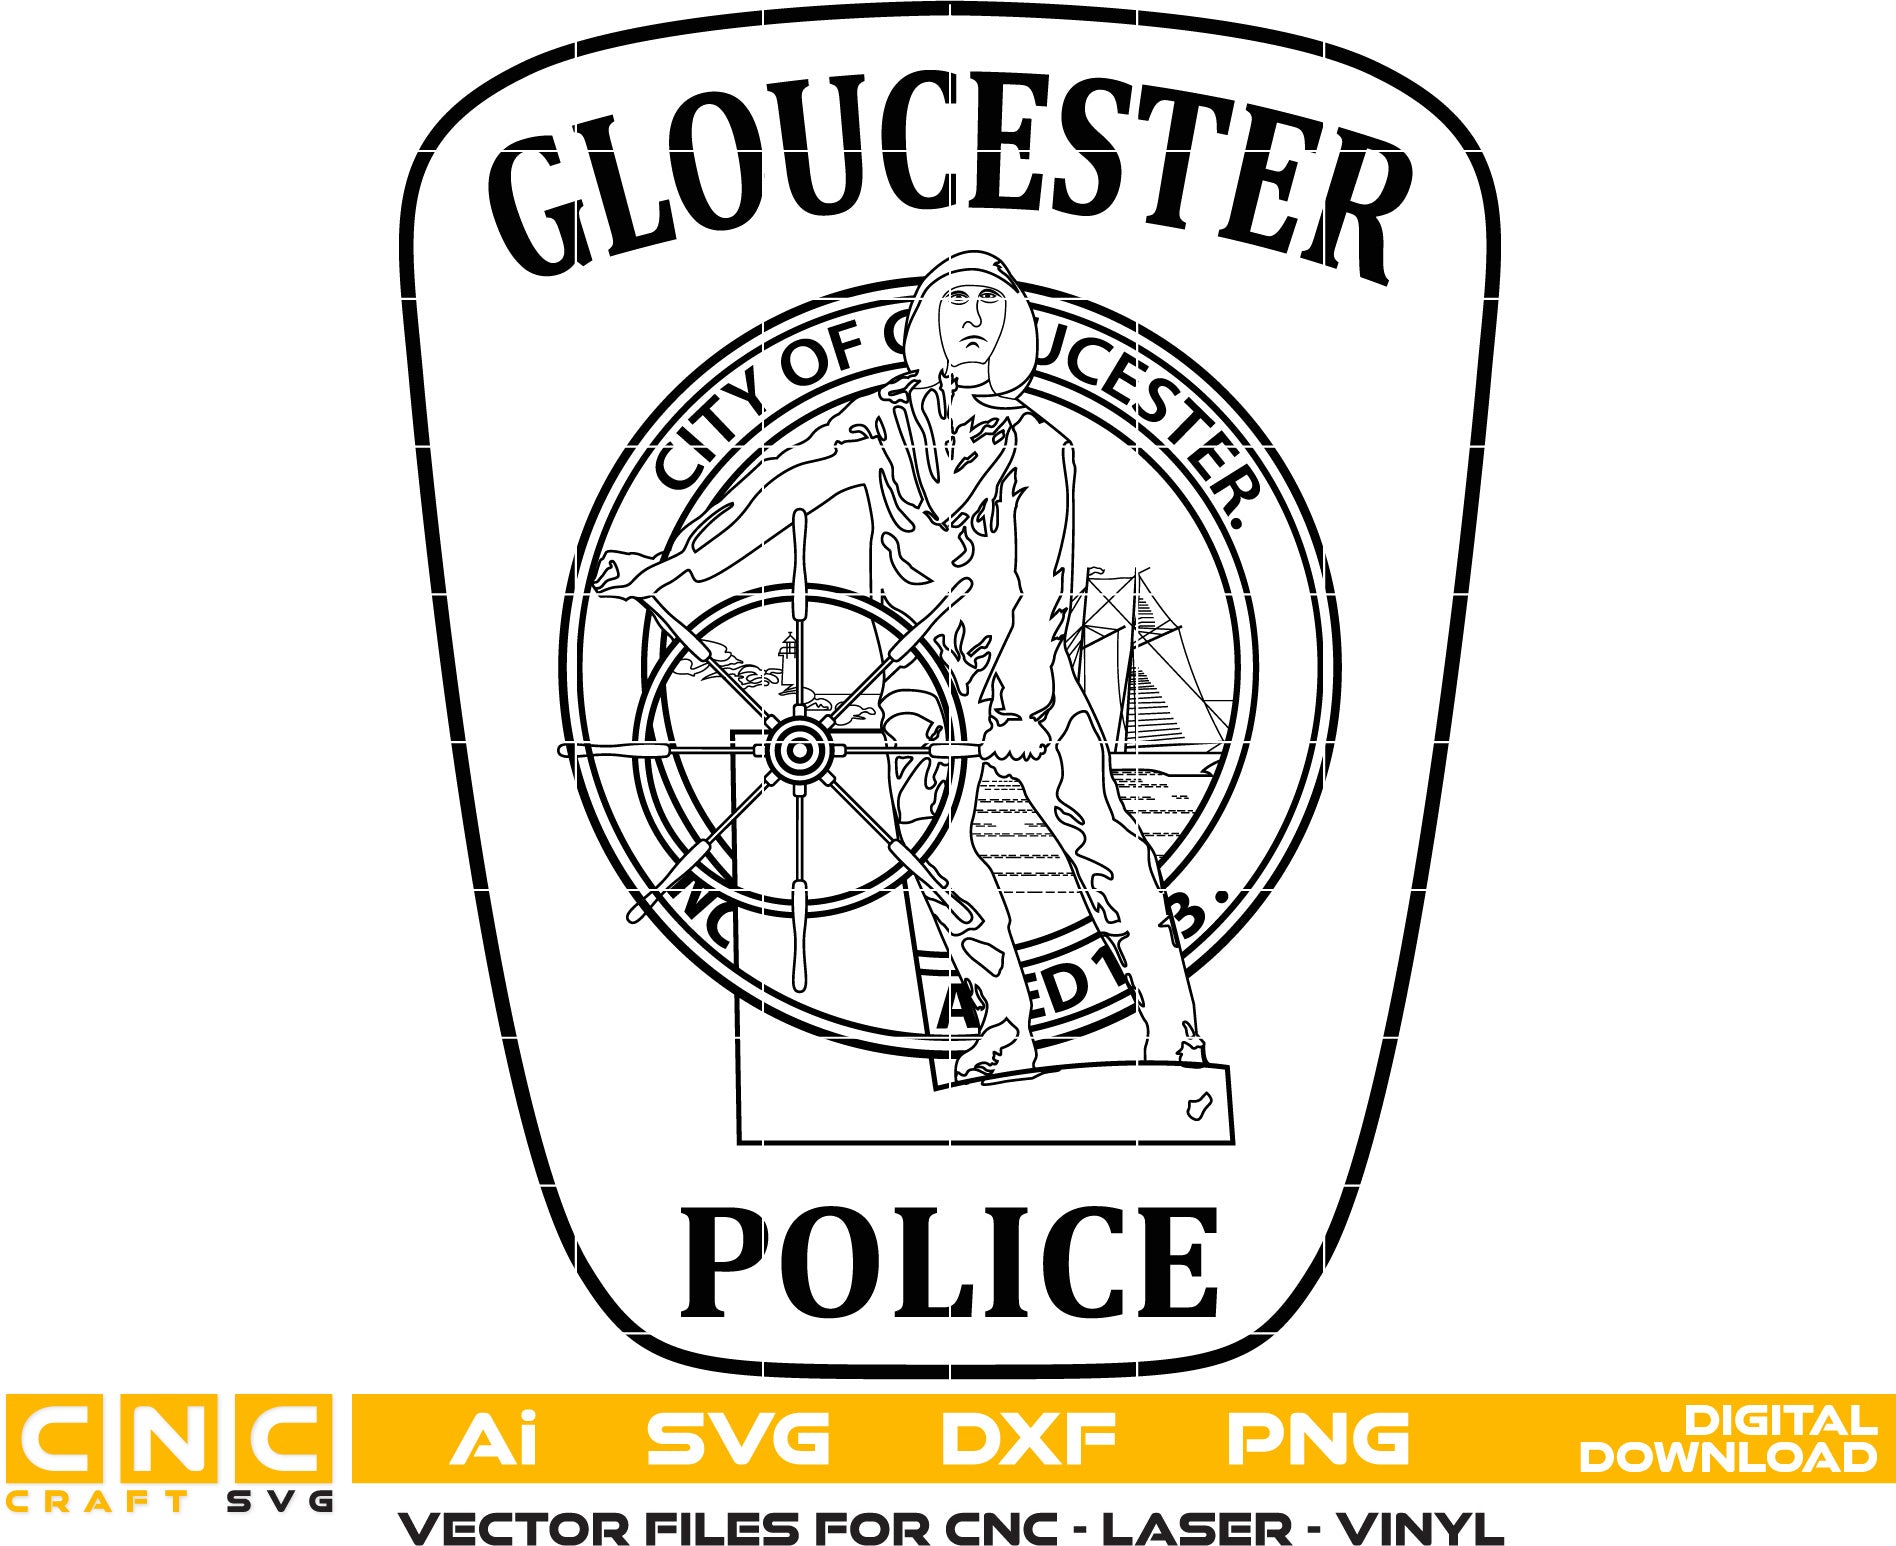 Gloucester Police seal Vector file